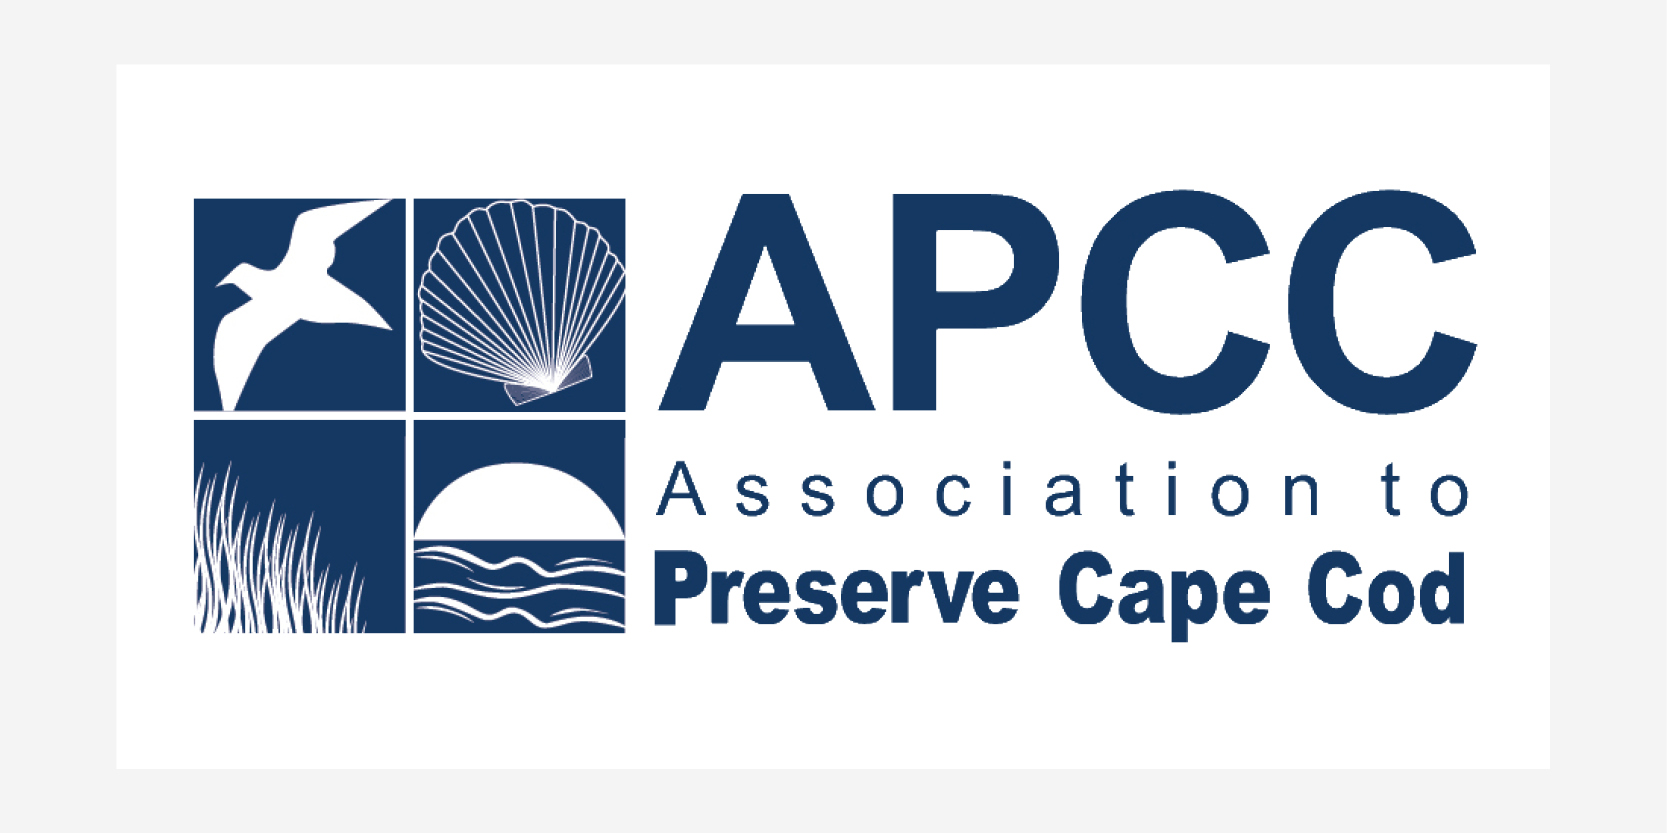 Association to Preserve Cape Cod logo